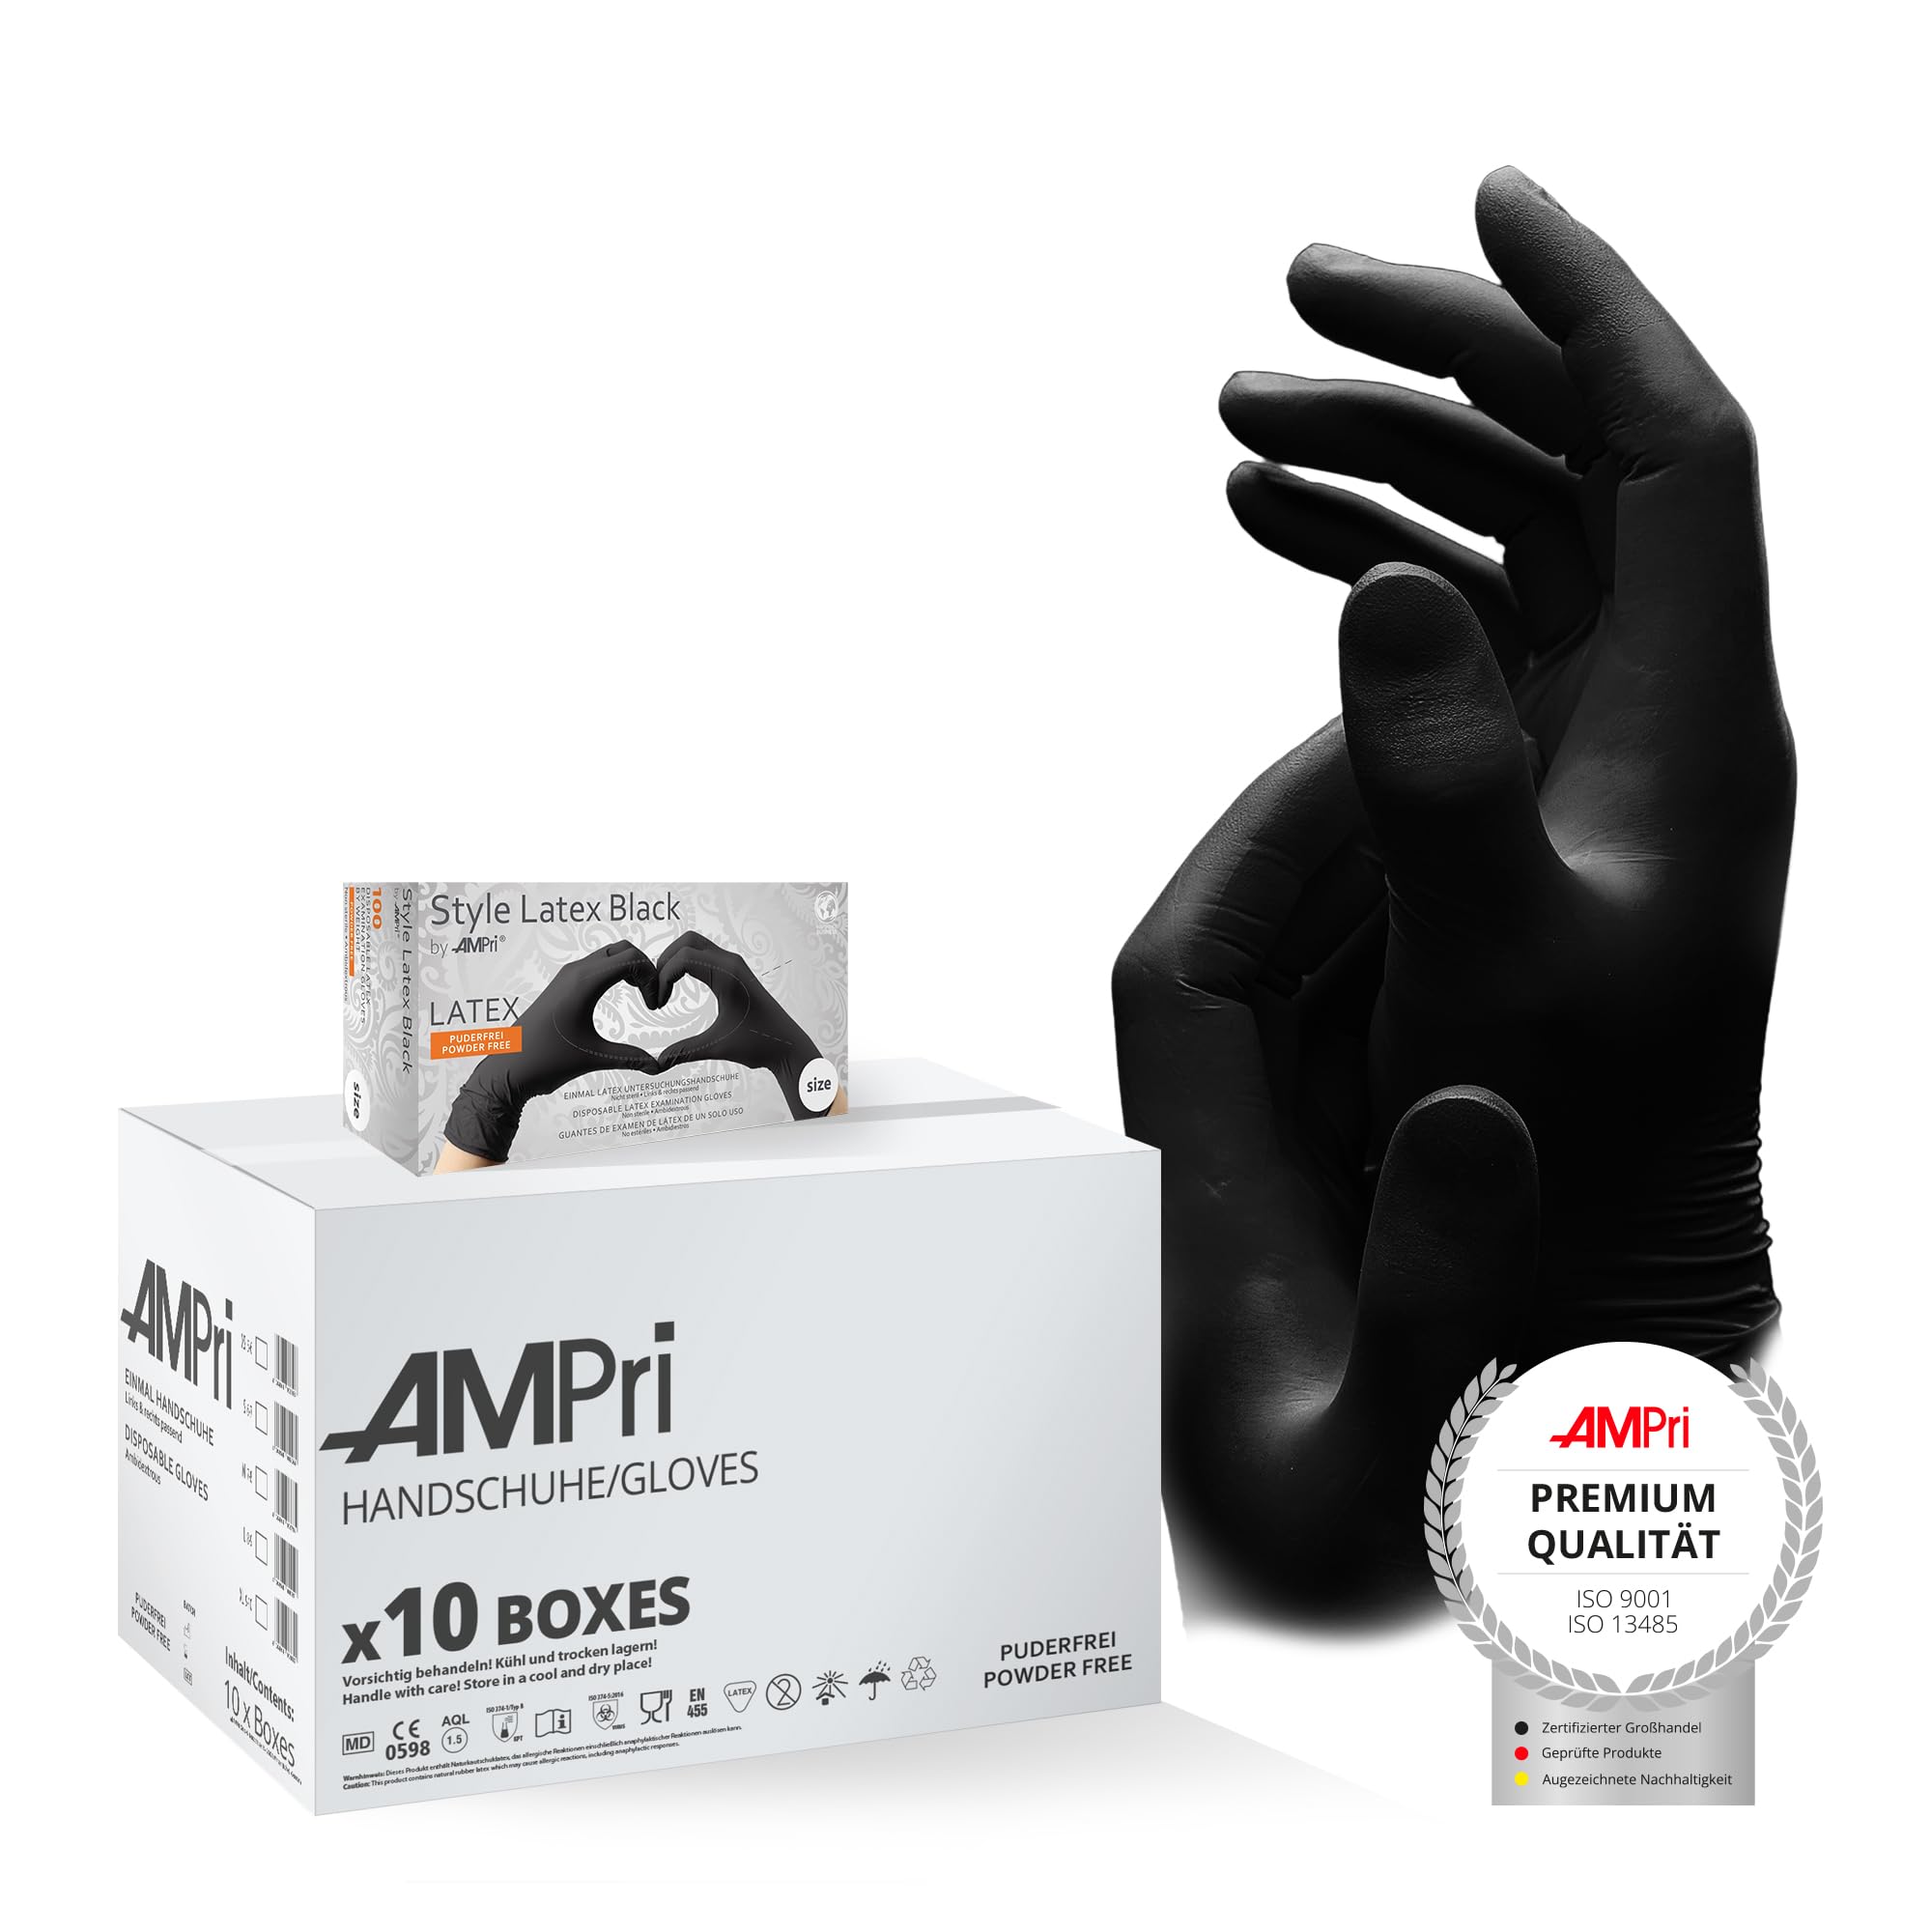 AMPri Latexhandschuhe, schwarz, 10 Box a 100 Stk, Größe L, puderfrei, Style Latex Black: Latex Einweghandschuhe in den Größen XS, S, M, L, XL